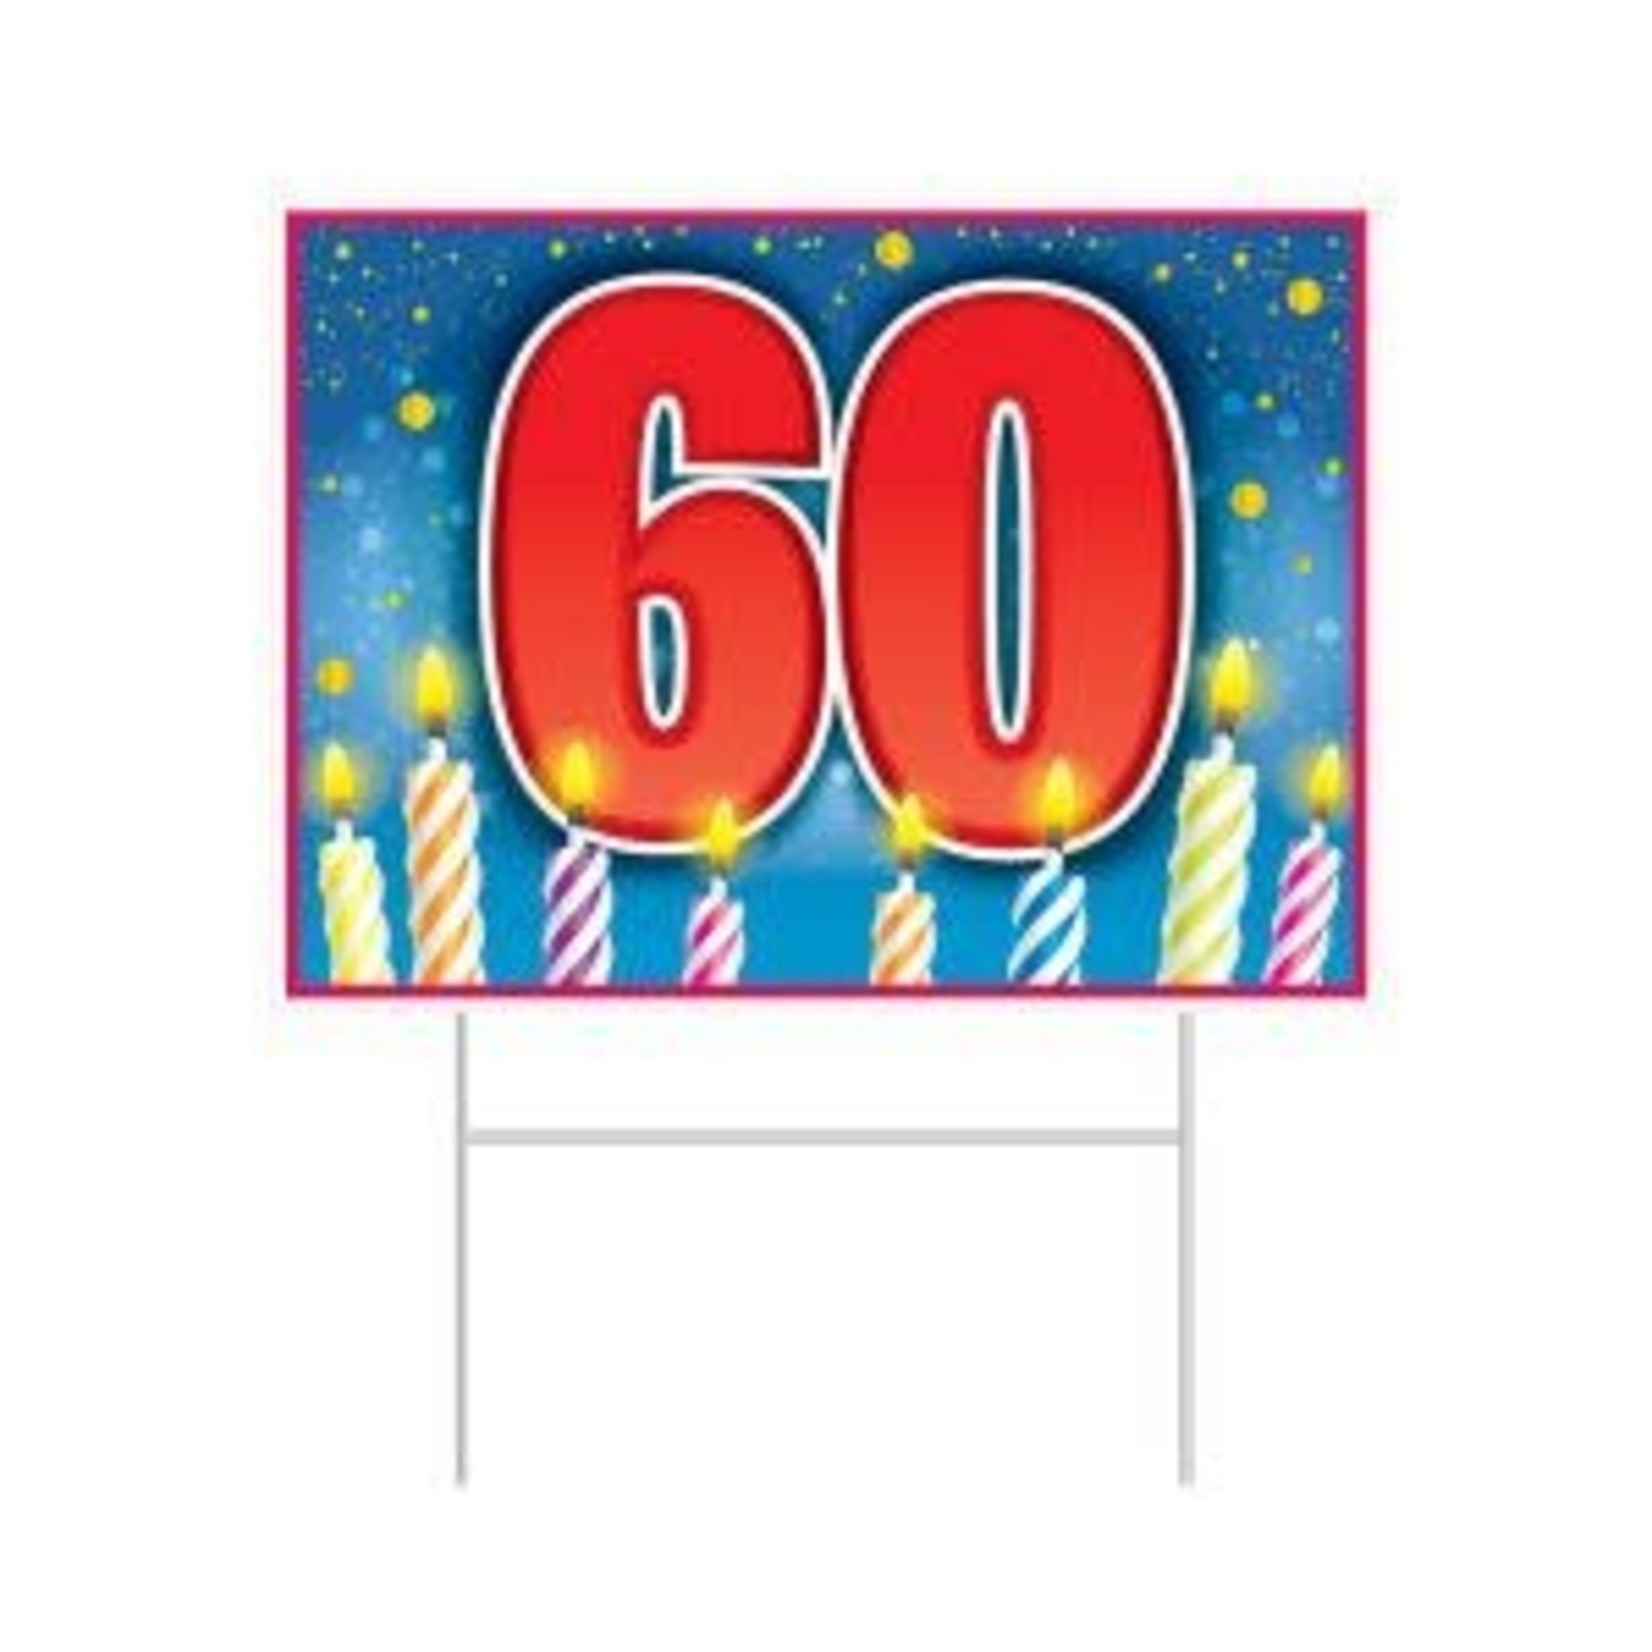 Beistle 60th Birthday Yard Sign - 11.5" x 15.5"